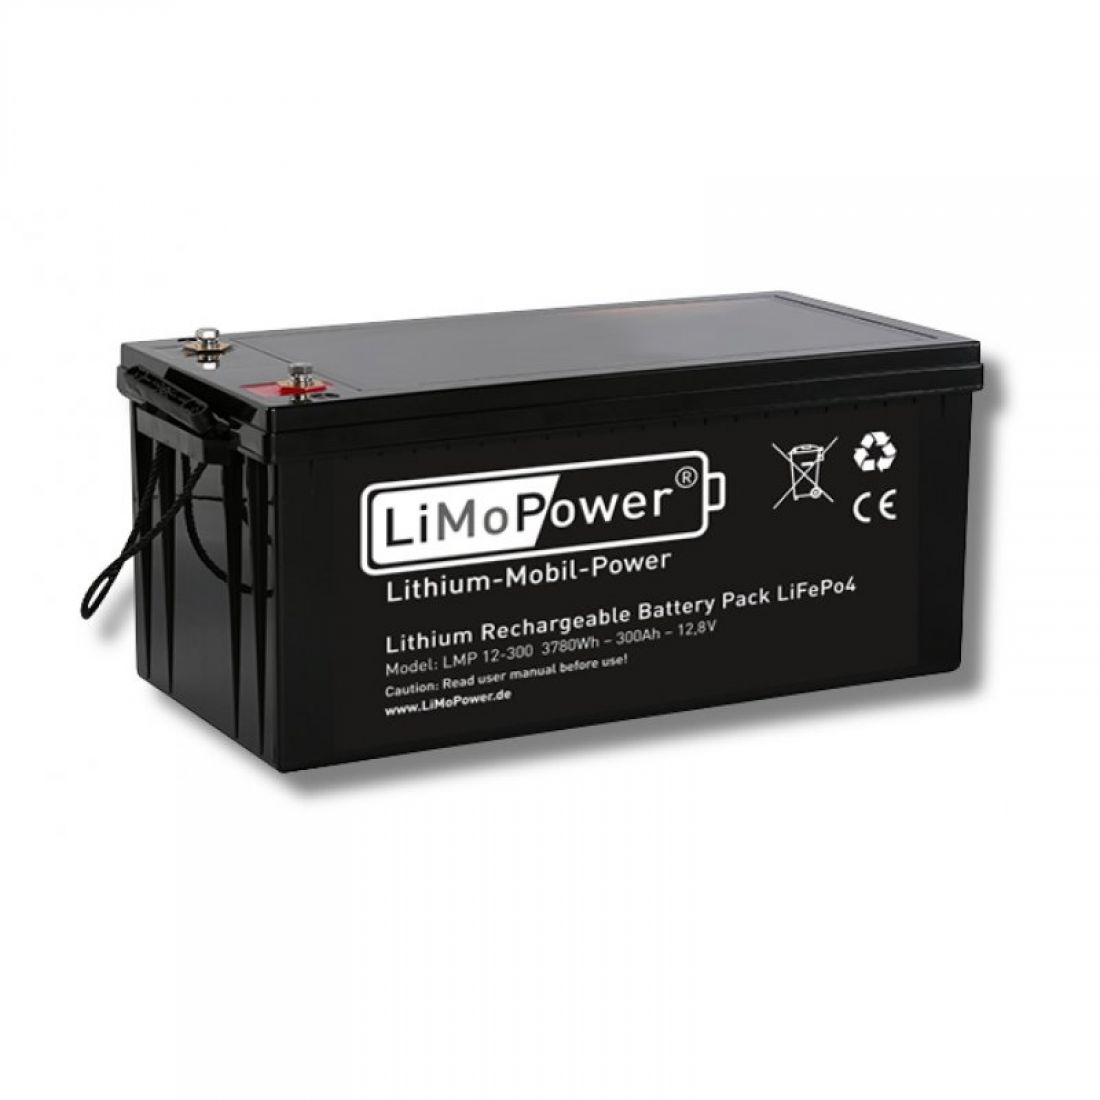 LiMoPower Lithium Ionen Akku 300 Ah